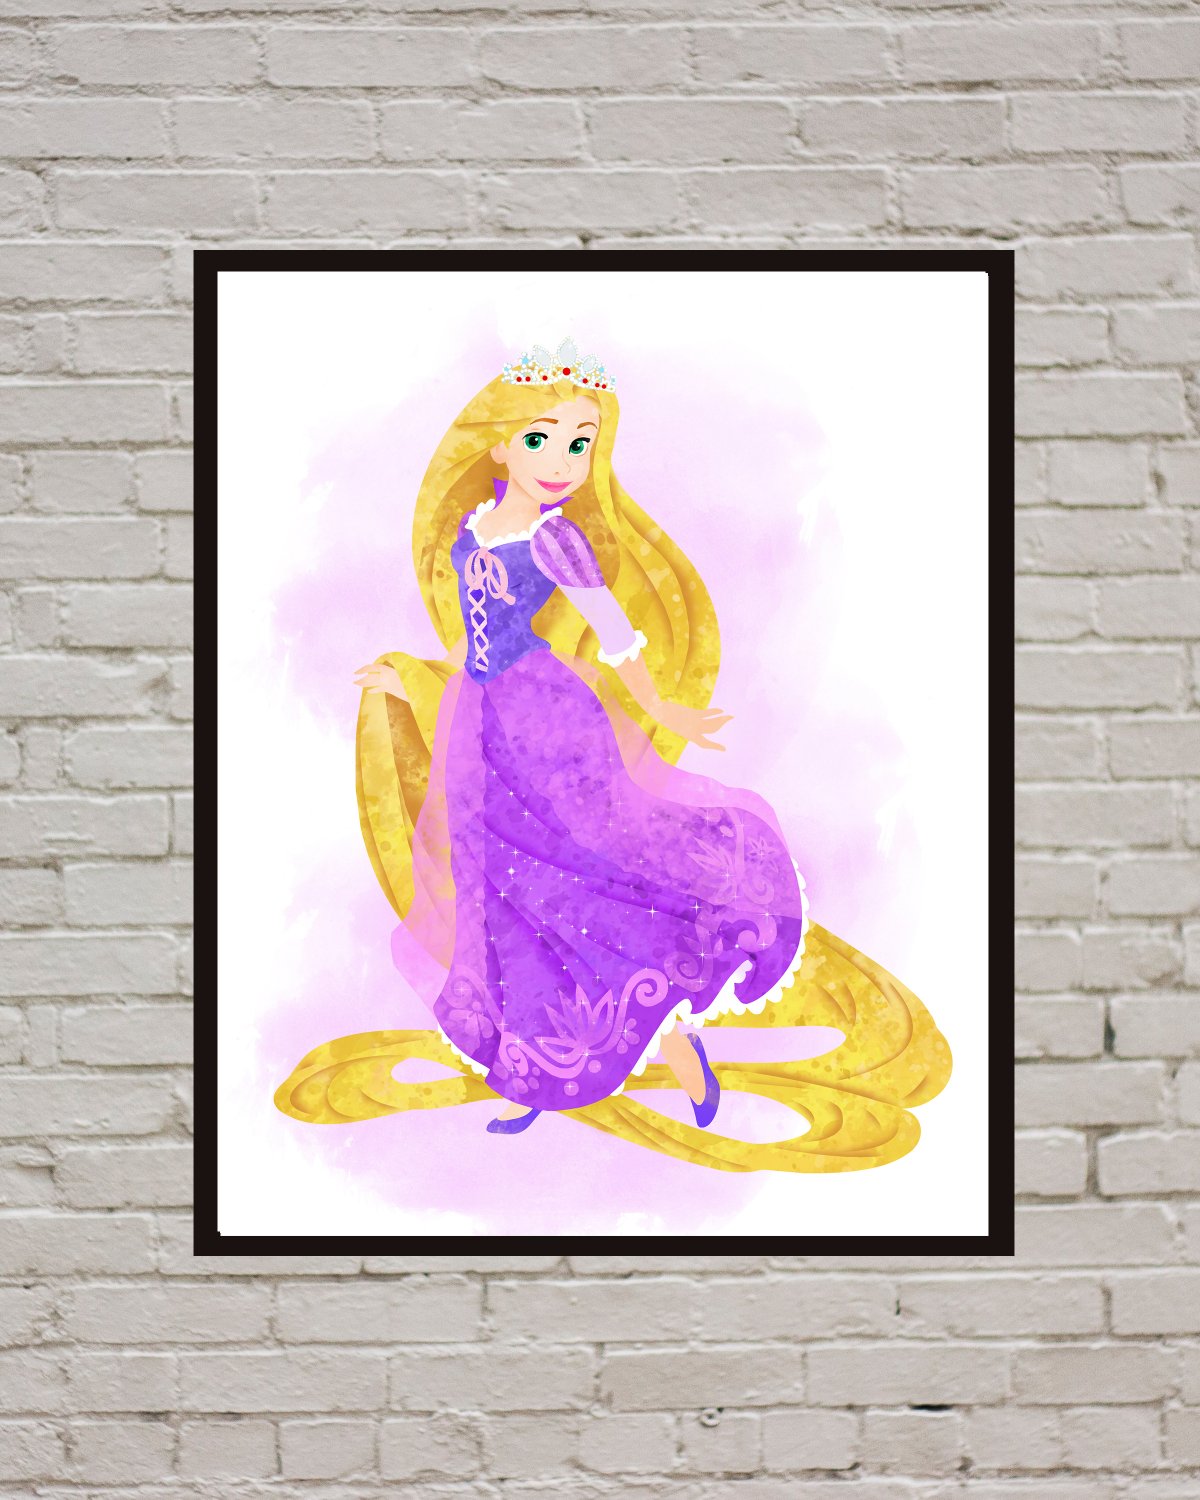 Digital files, Tangled print, Rapunzel poster watercolor nursery room home decor, room walls